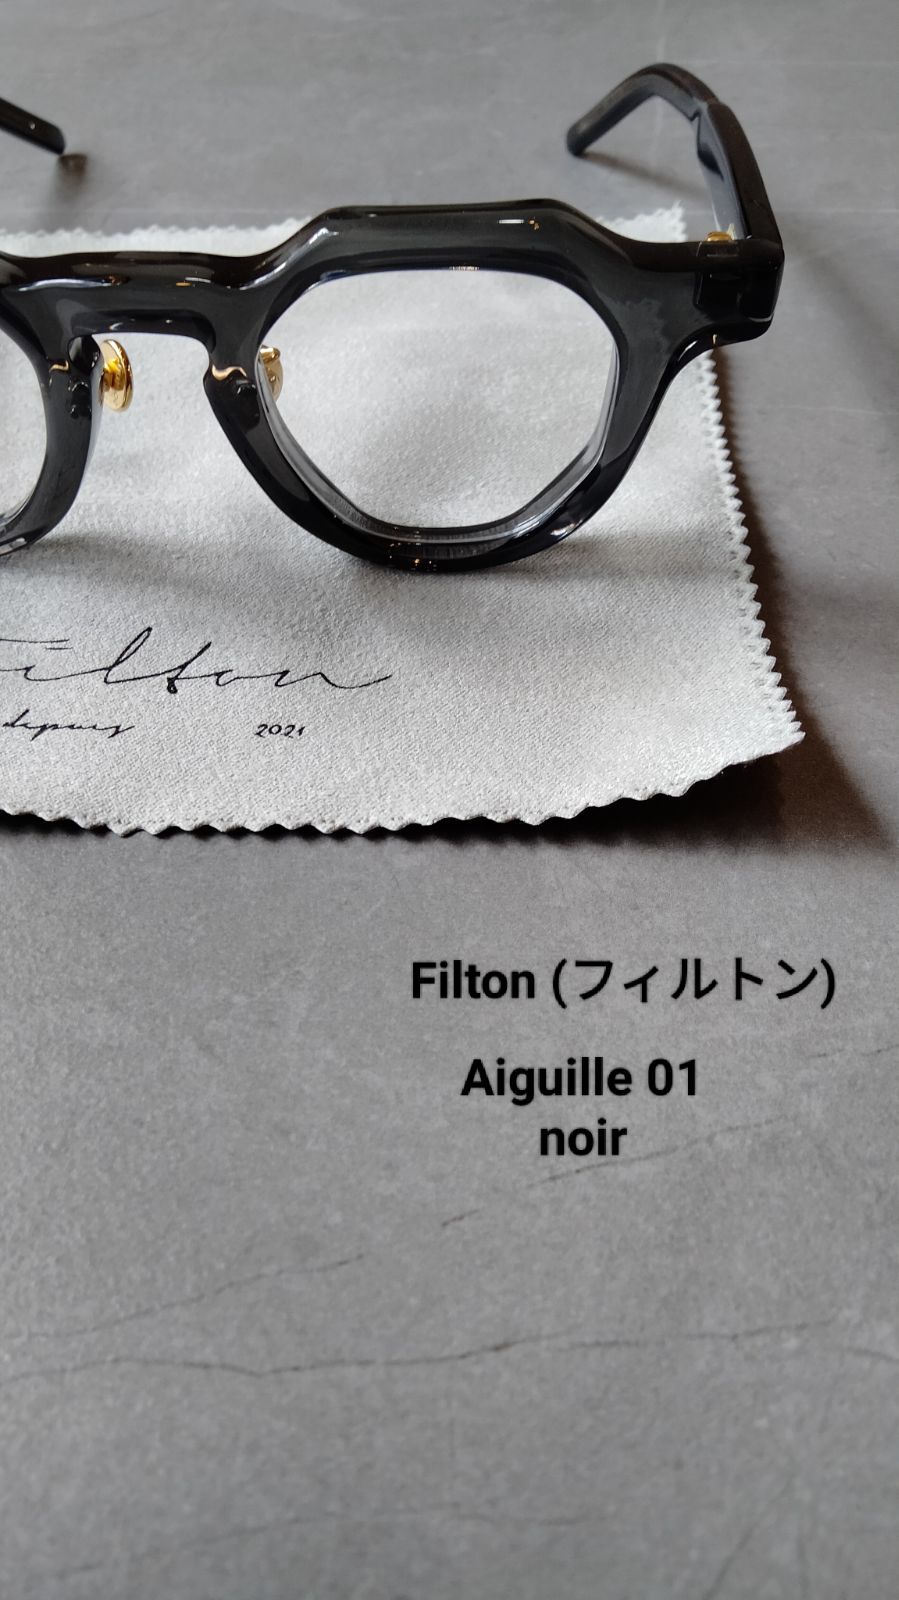 Filton Aiguille 01 - 小物